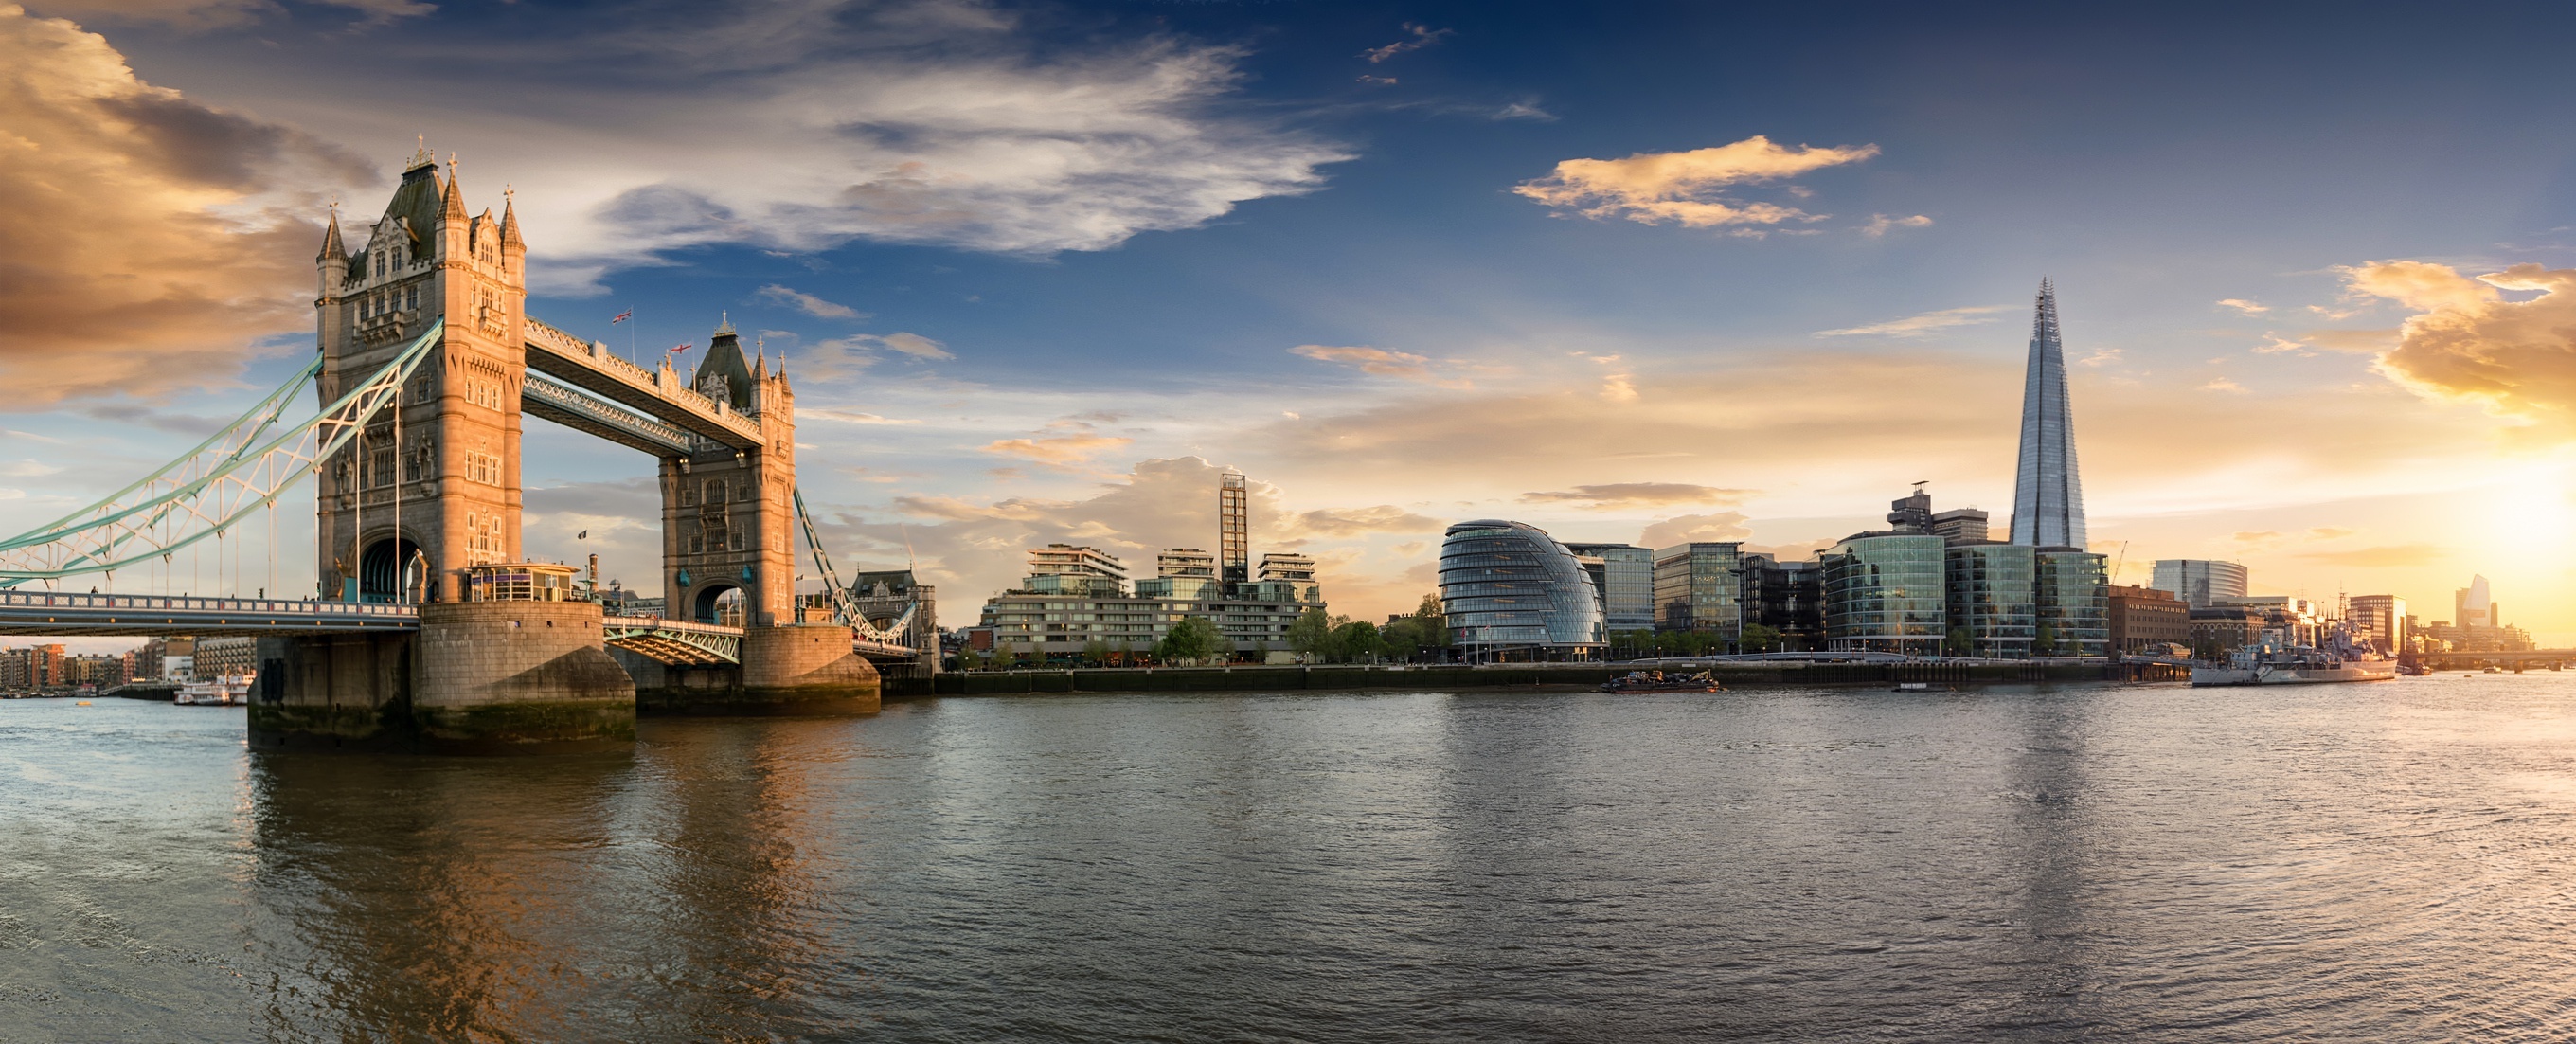 London Skyline, HD wallpaper, Urban photography, City view, 2720x1110 Dual Screen Desktop